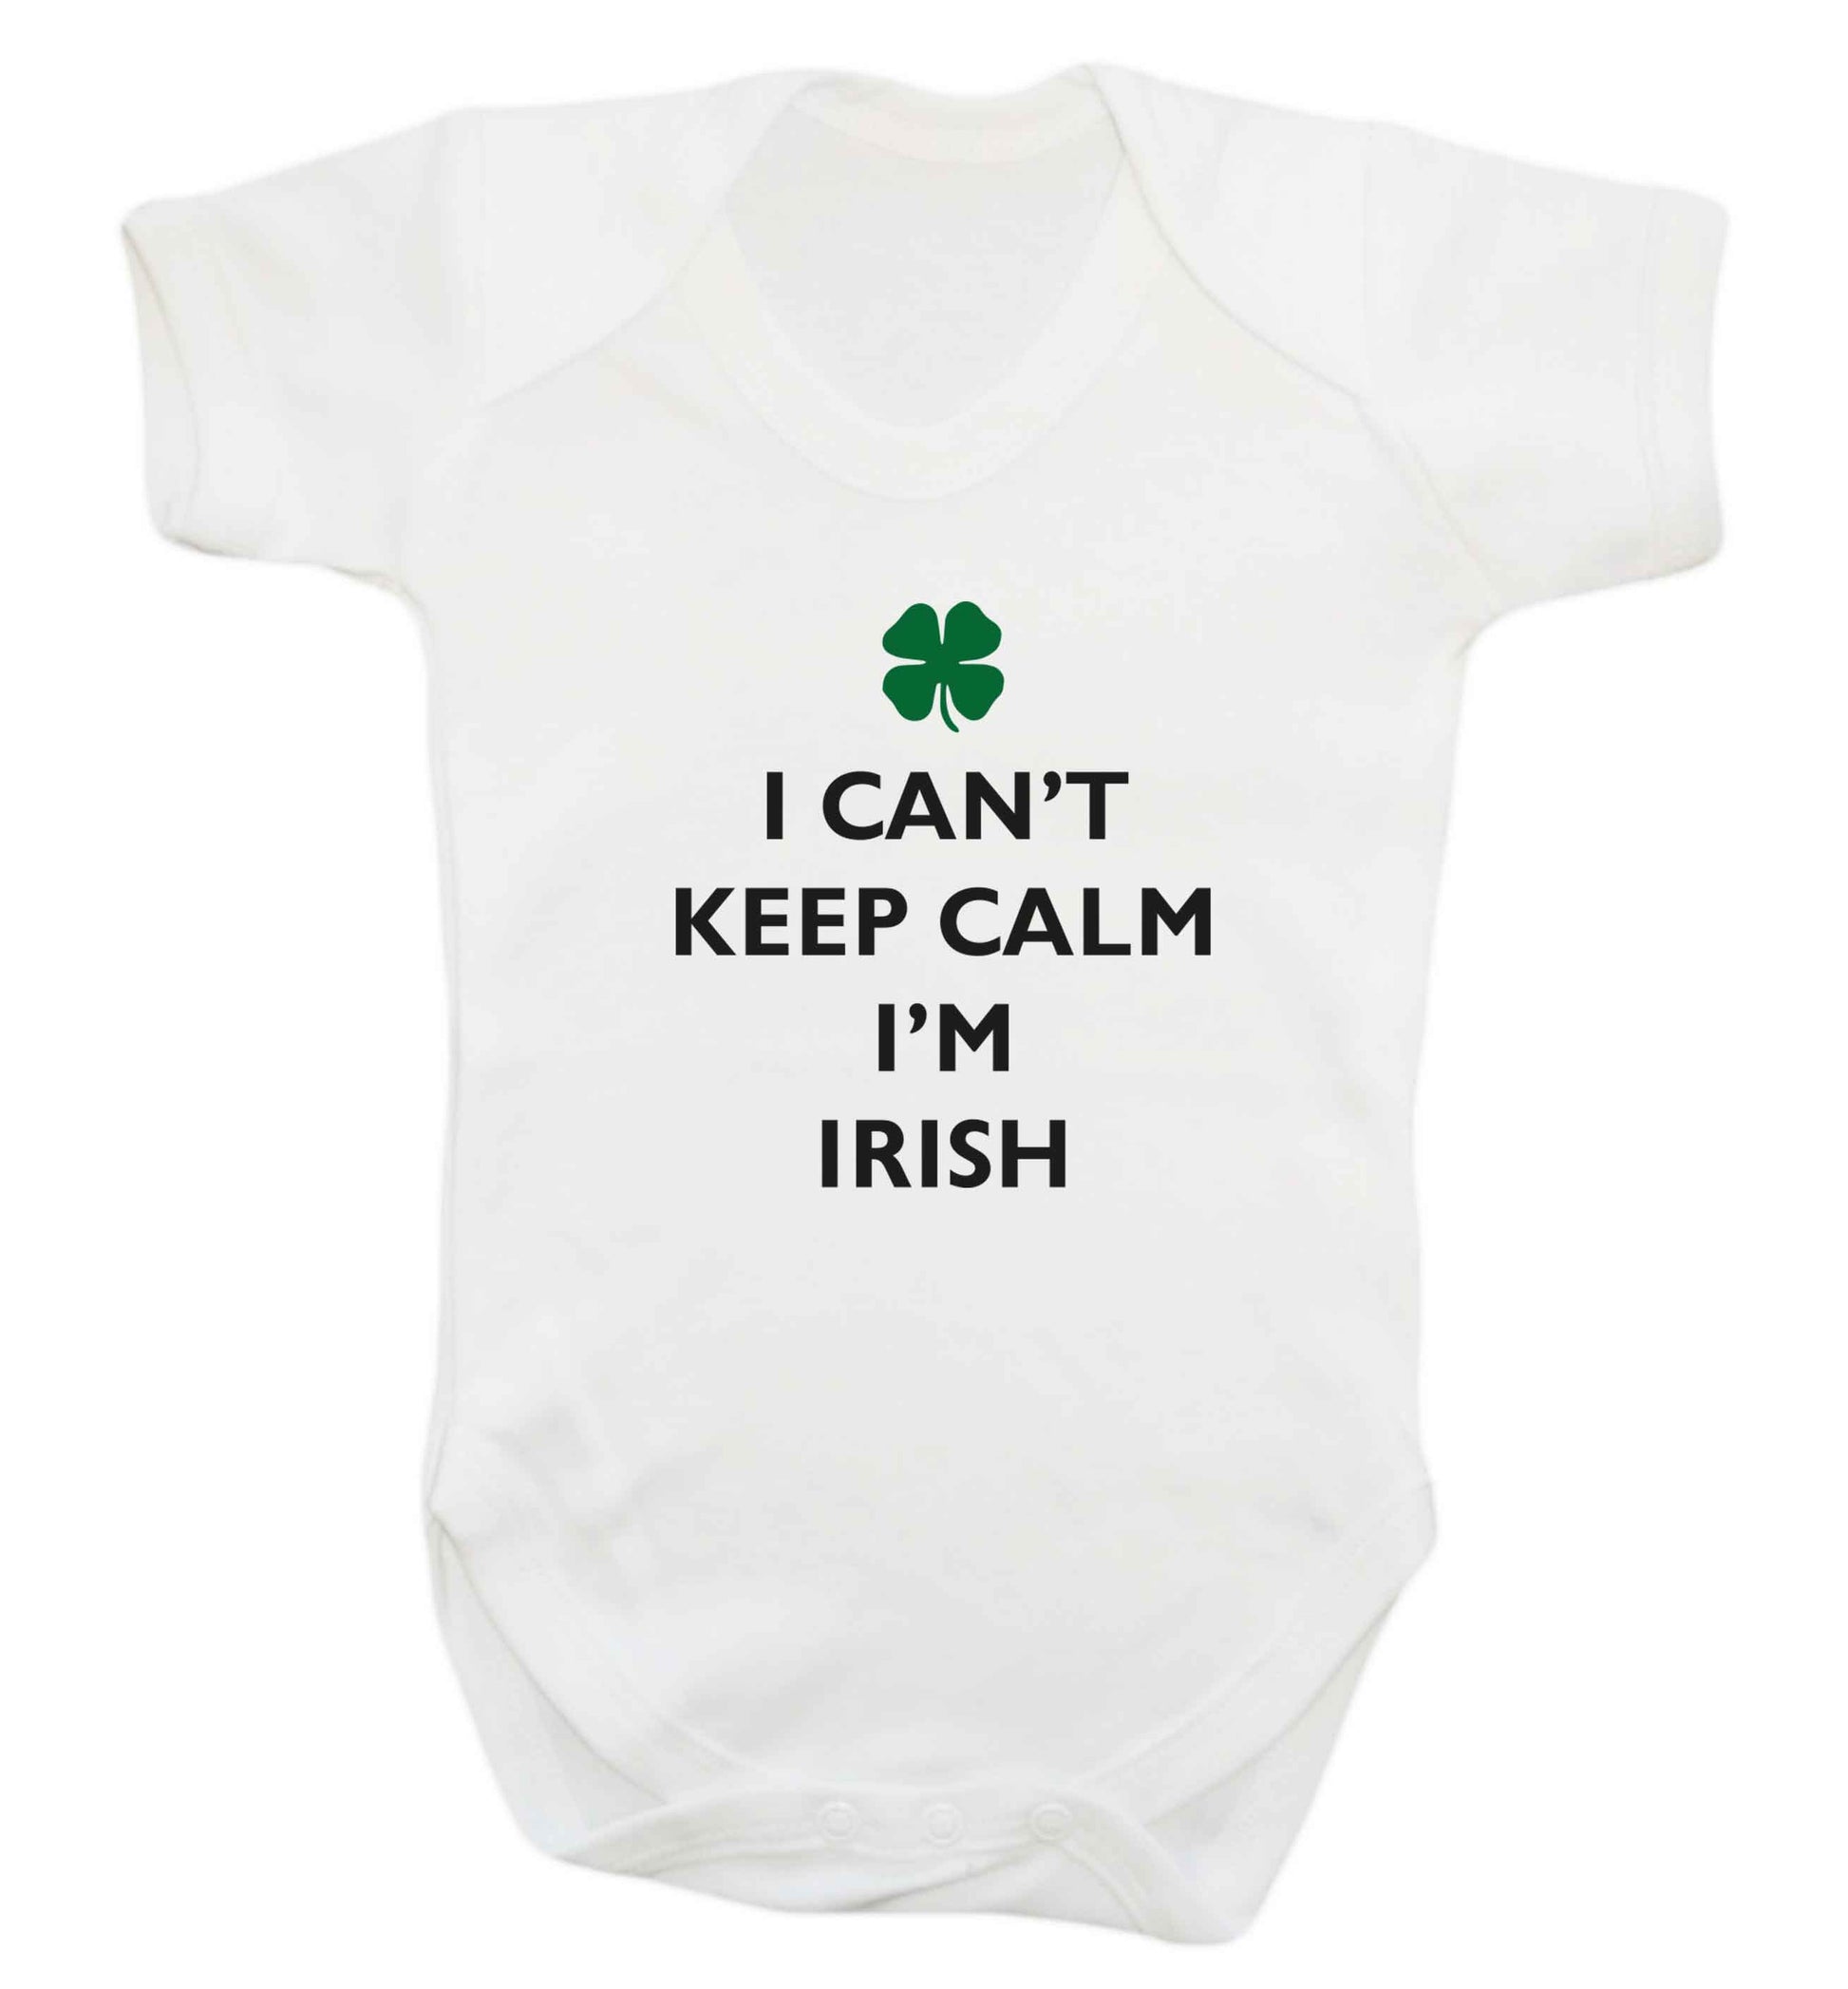 I can't keep calm I'm Irish baby vest white 18-24 months